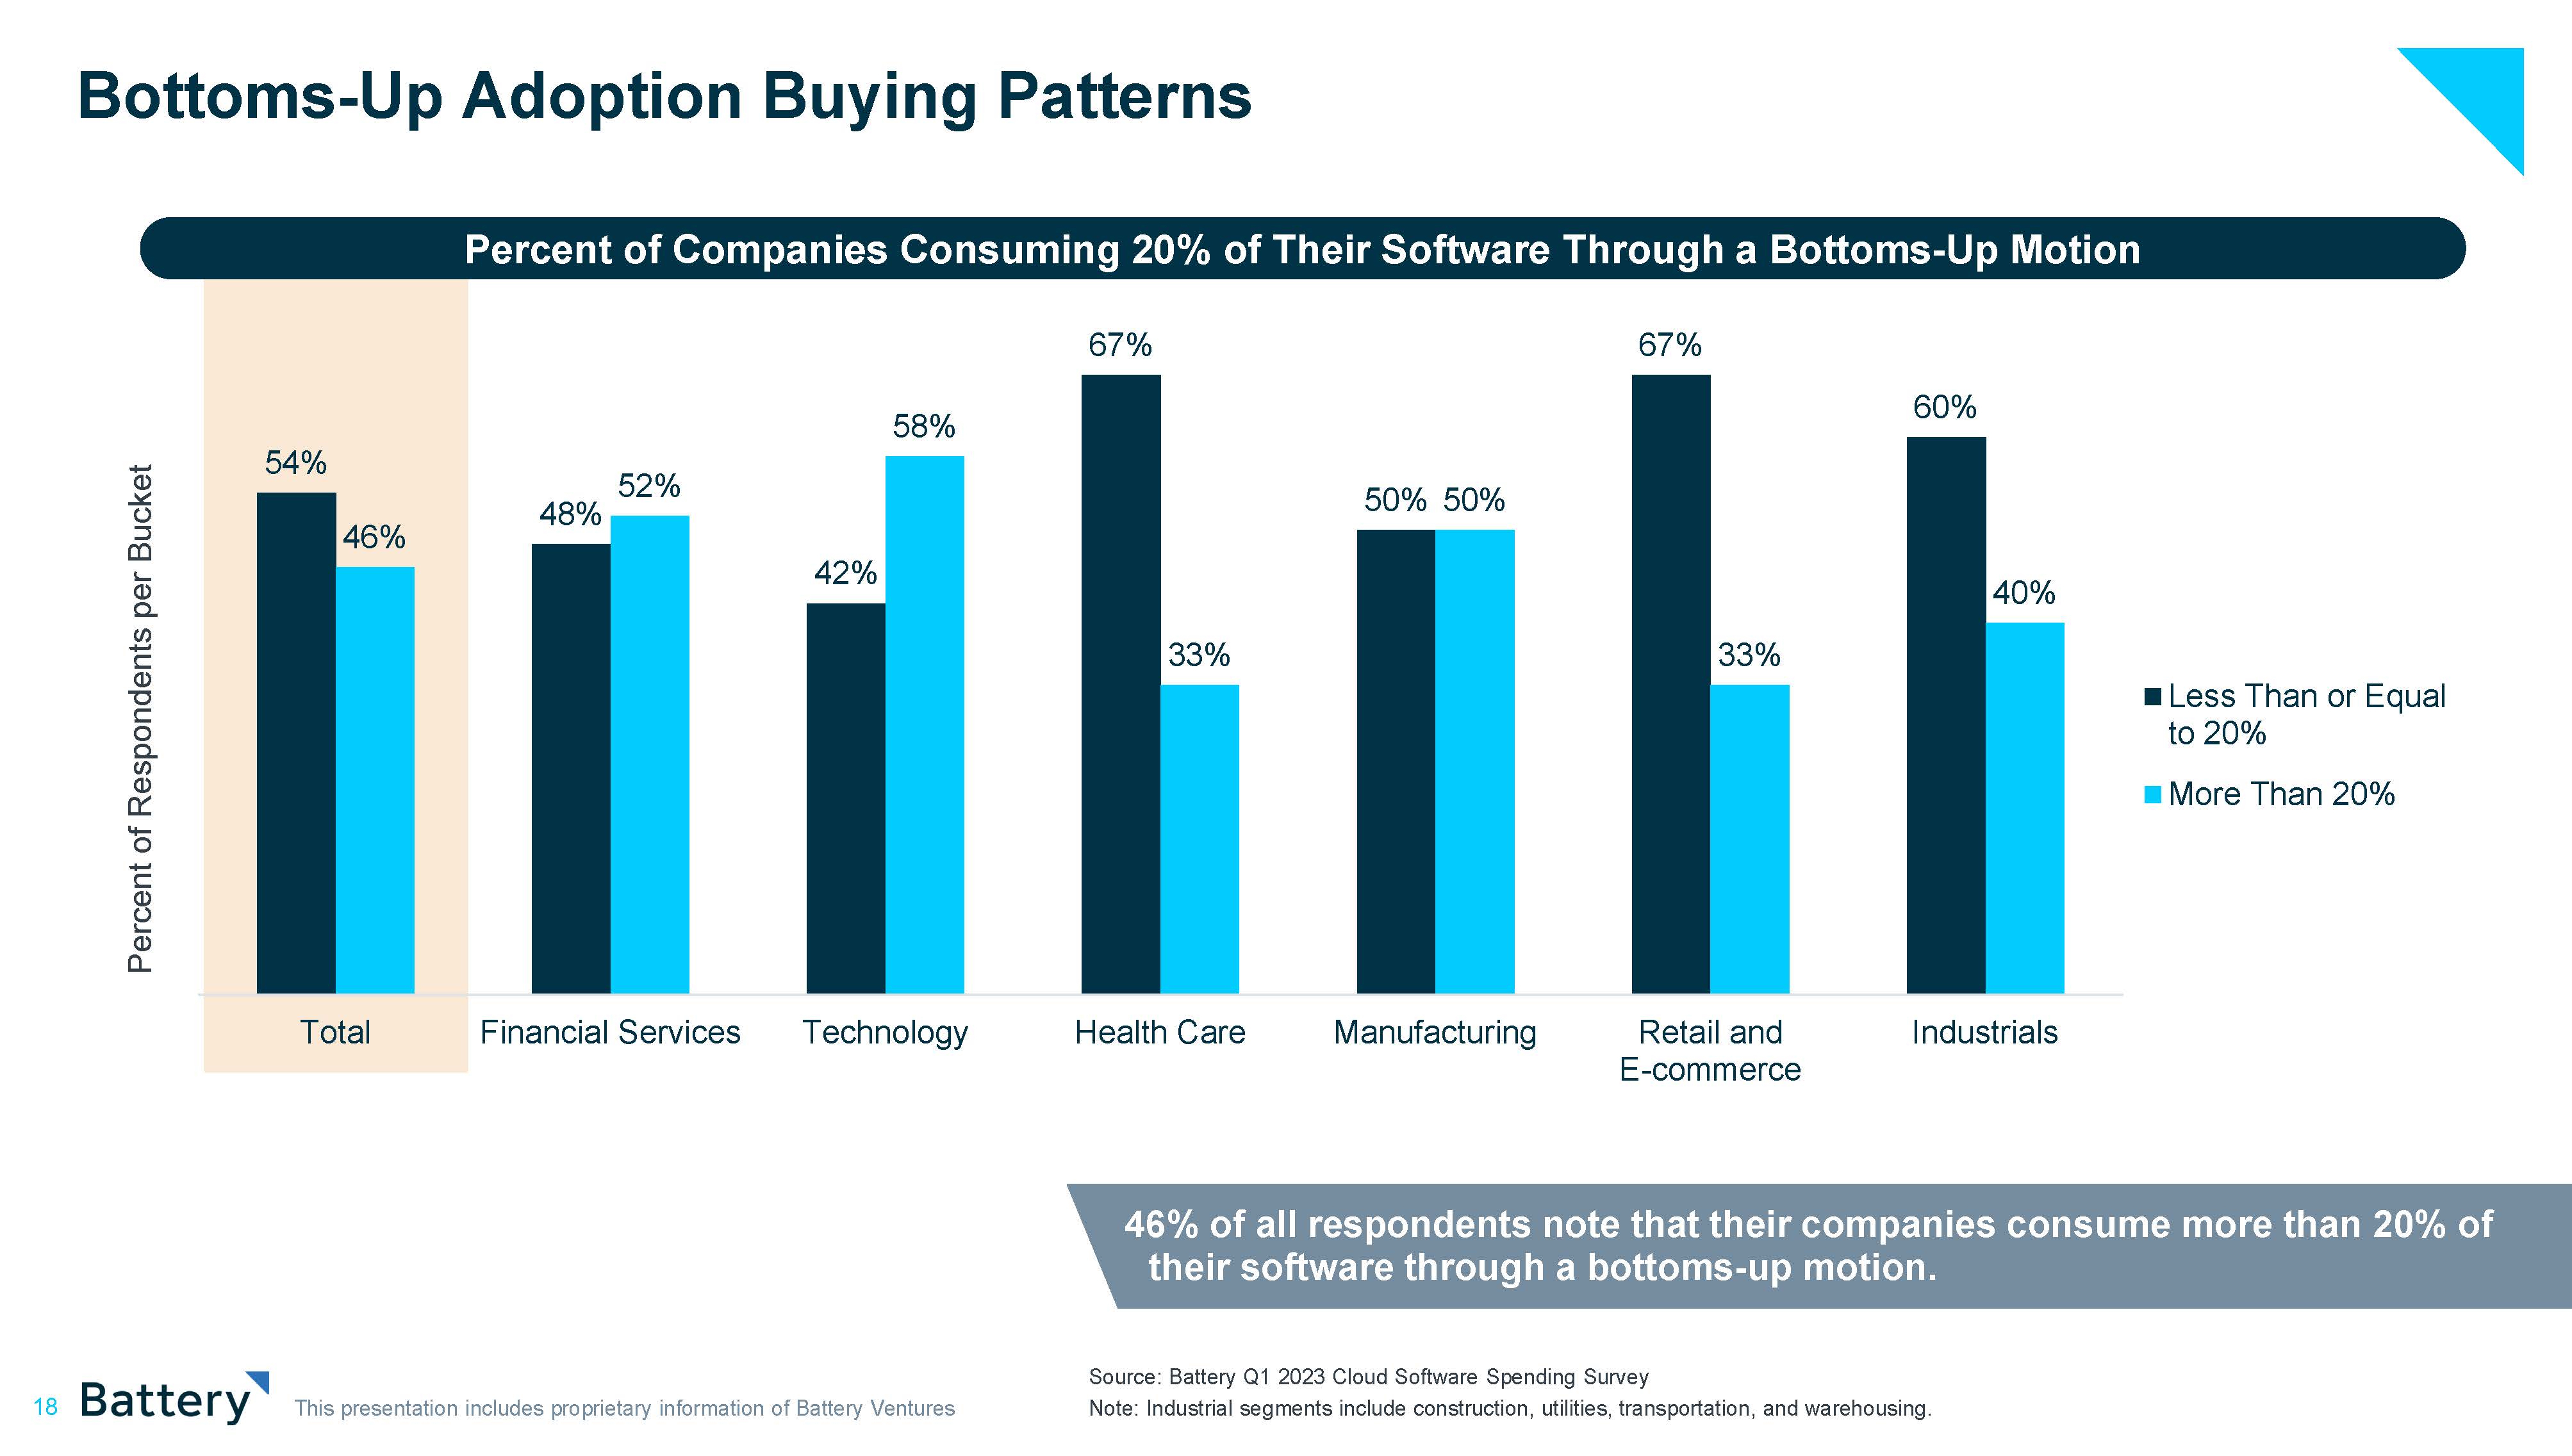 Bottoms-up adoption buying patterns chart